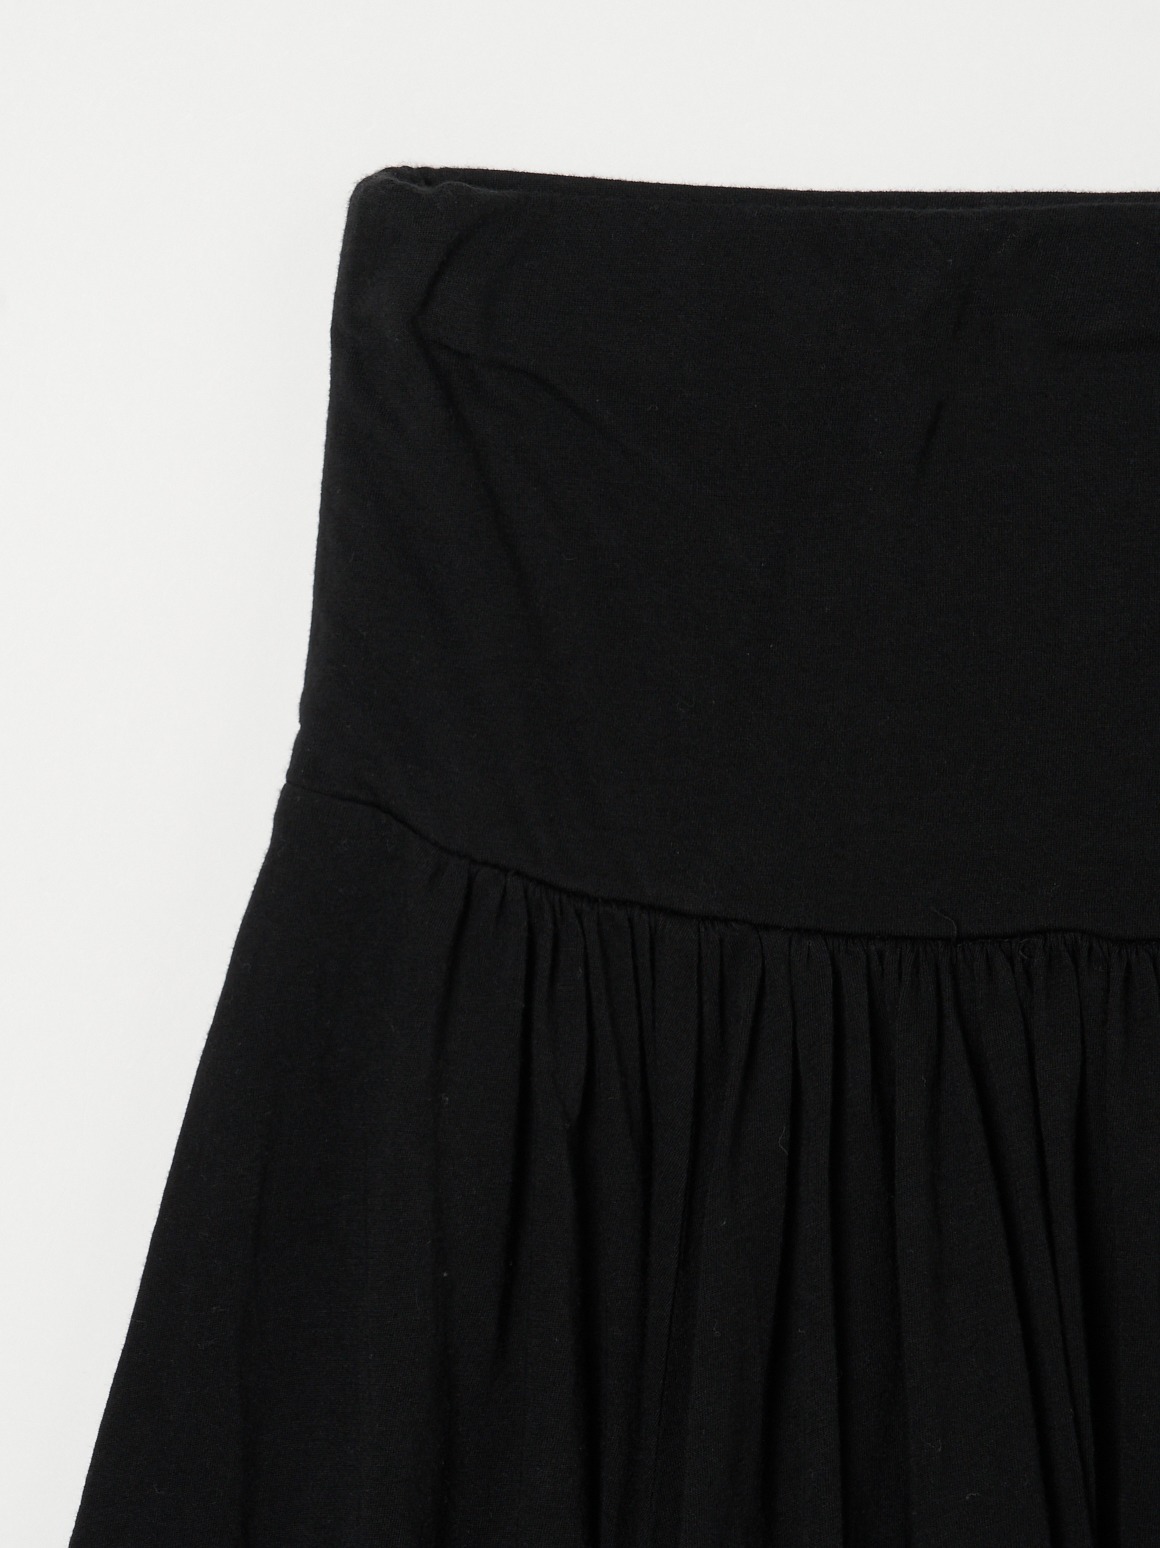 Jersey colette medium long skirt